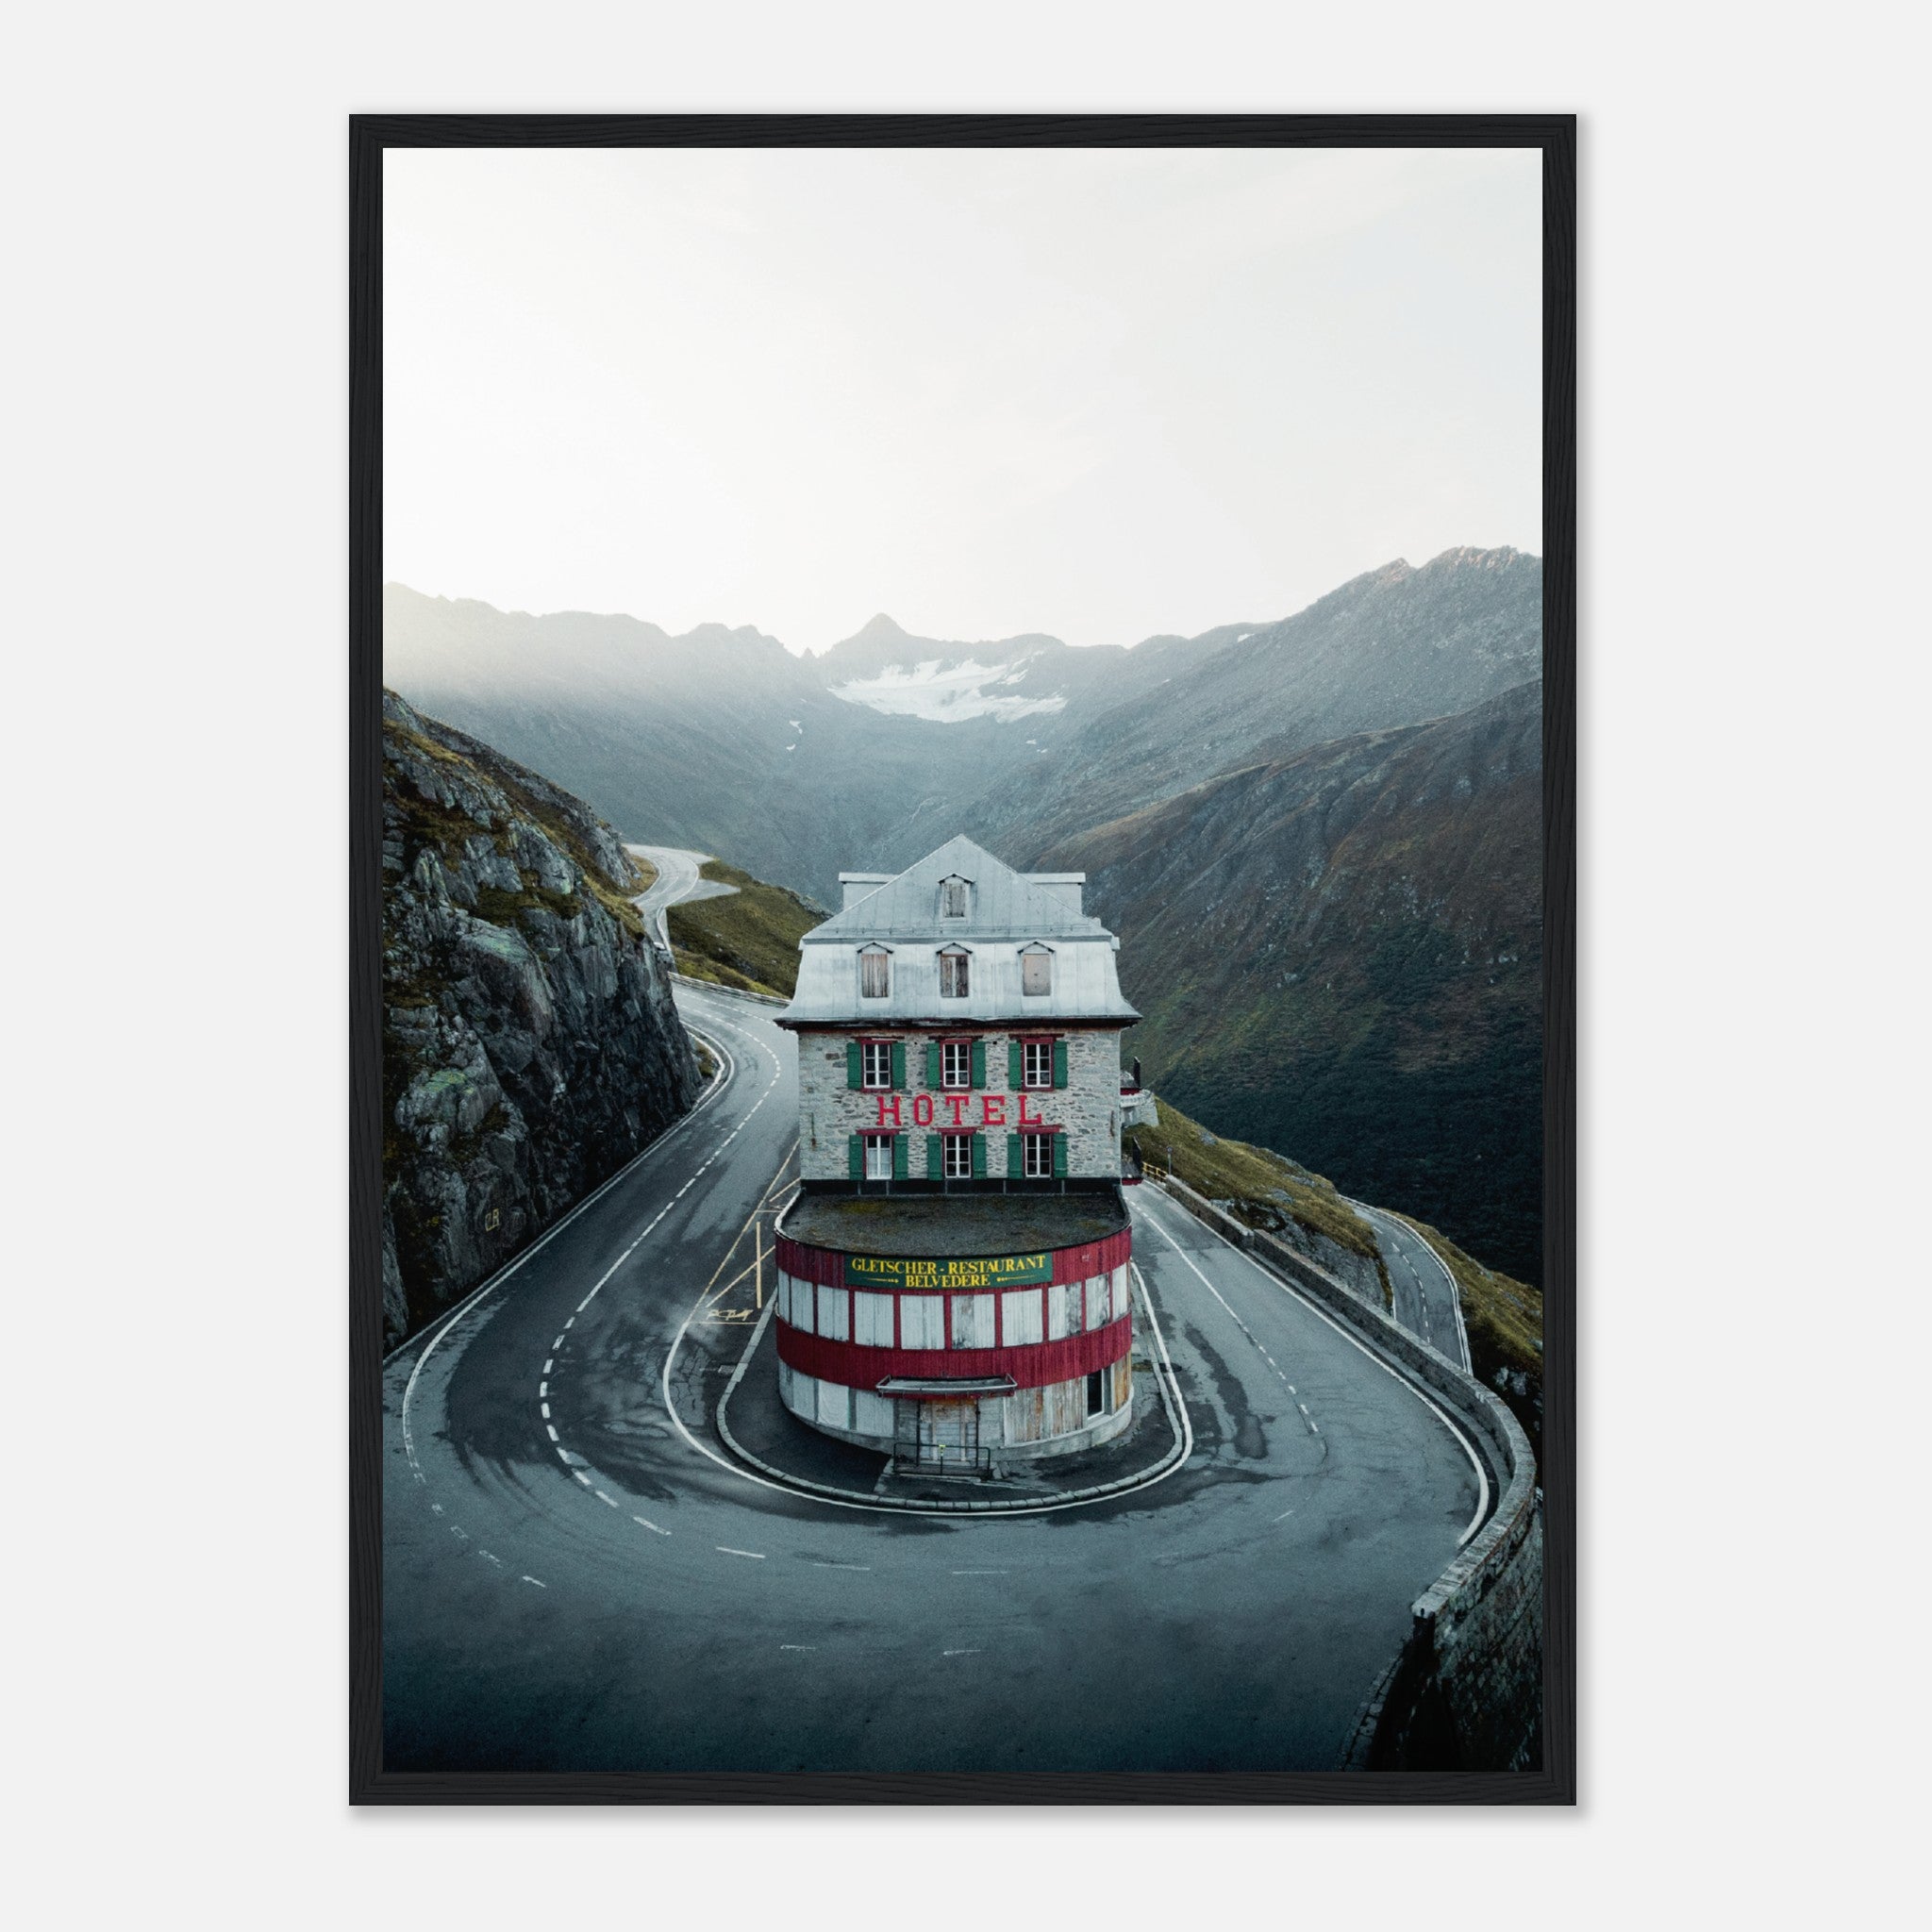 Hotel Belvedere At Furkapass Switzerland Poster